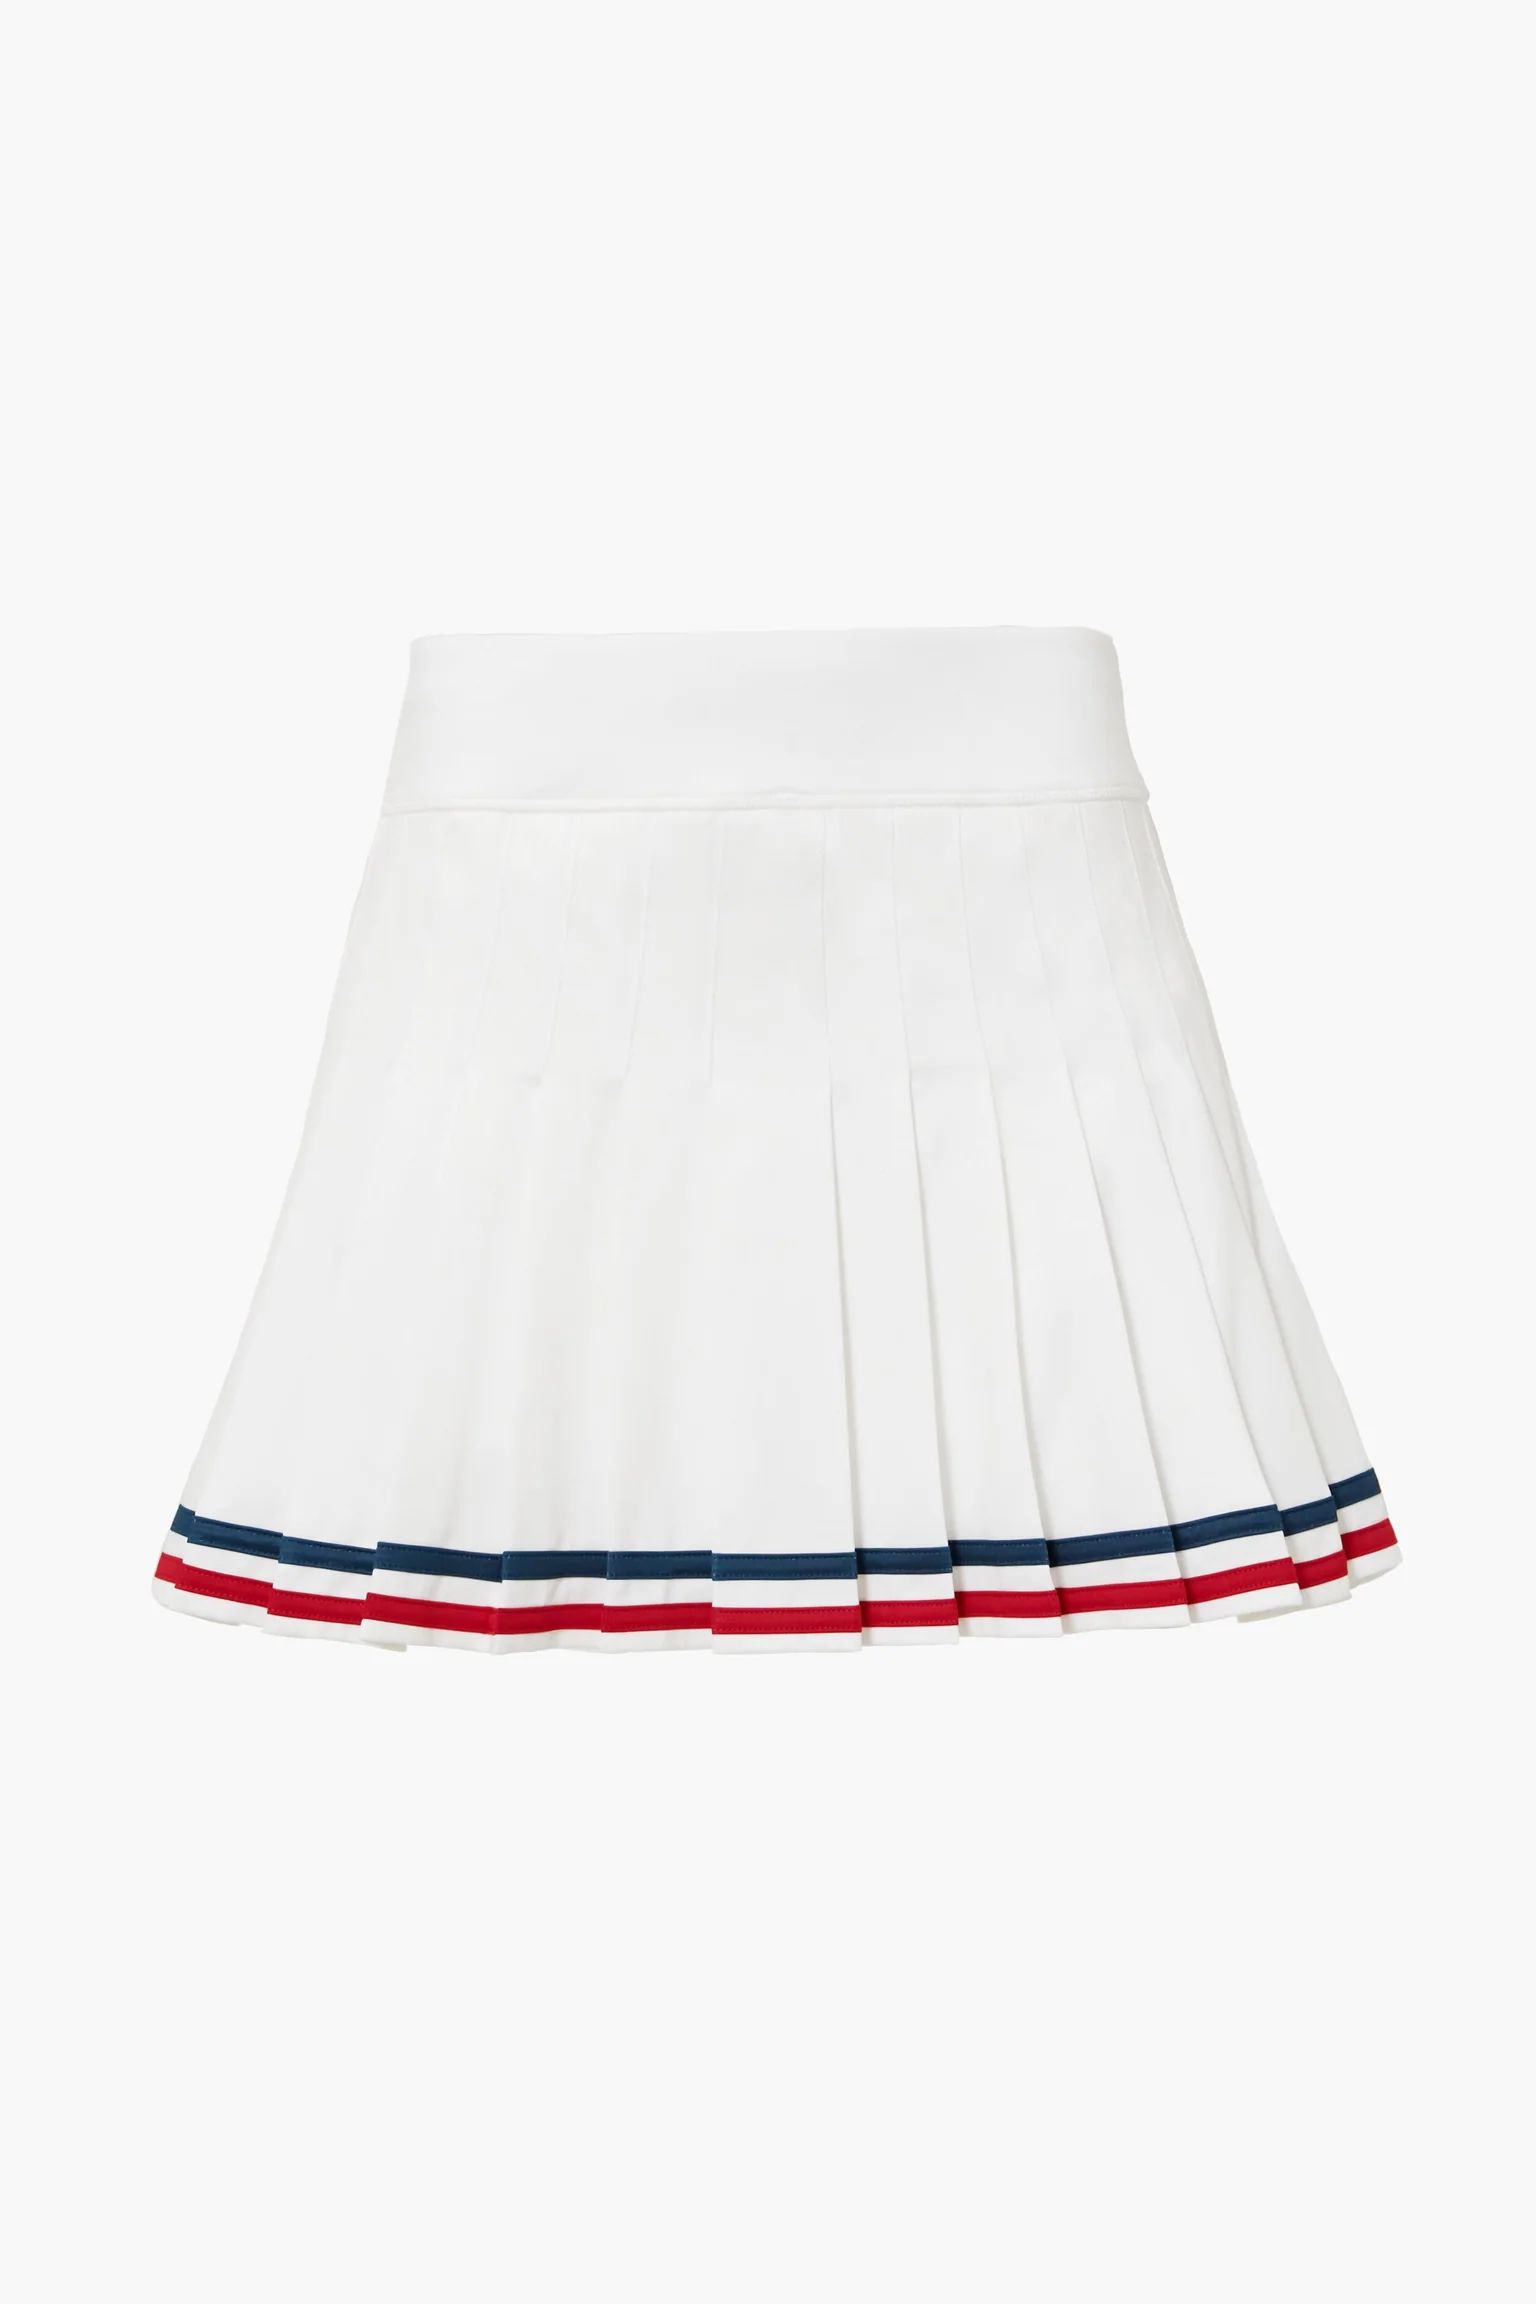 Americana 15 Inch Williams Tennis Skirt | Tuckernuck (US)